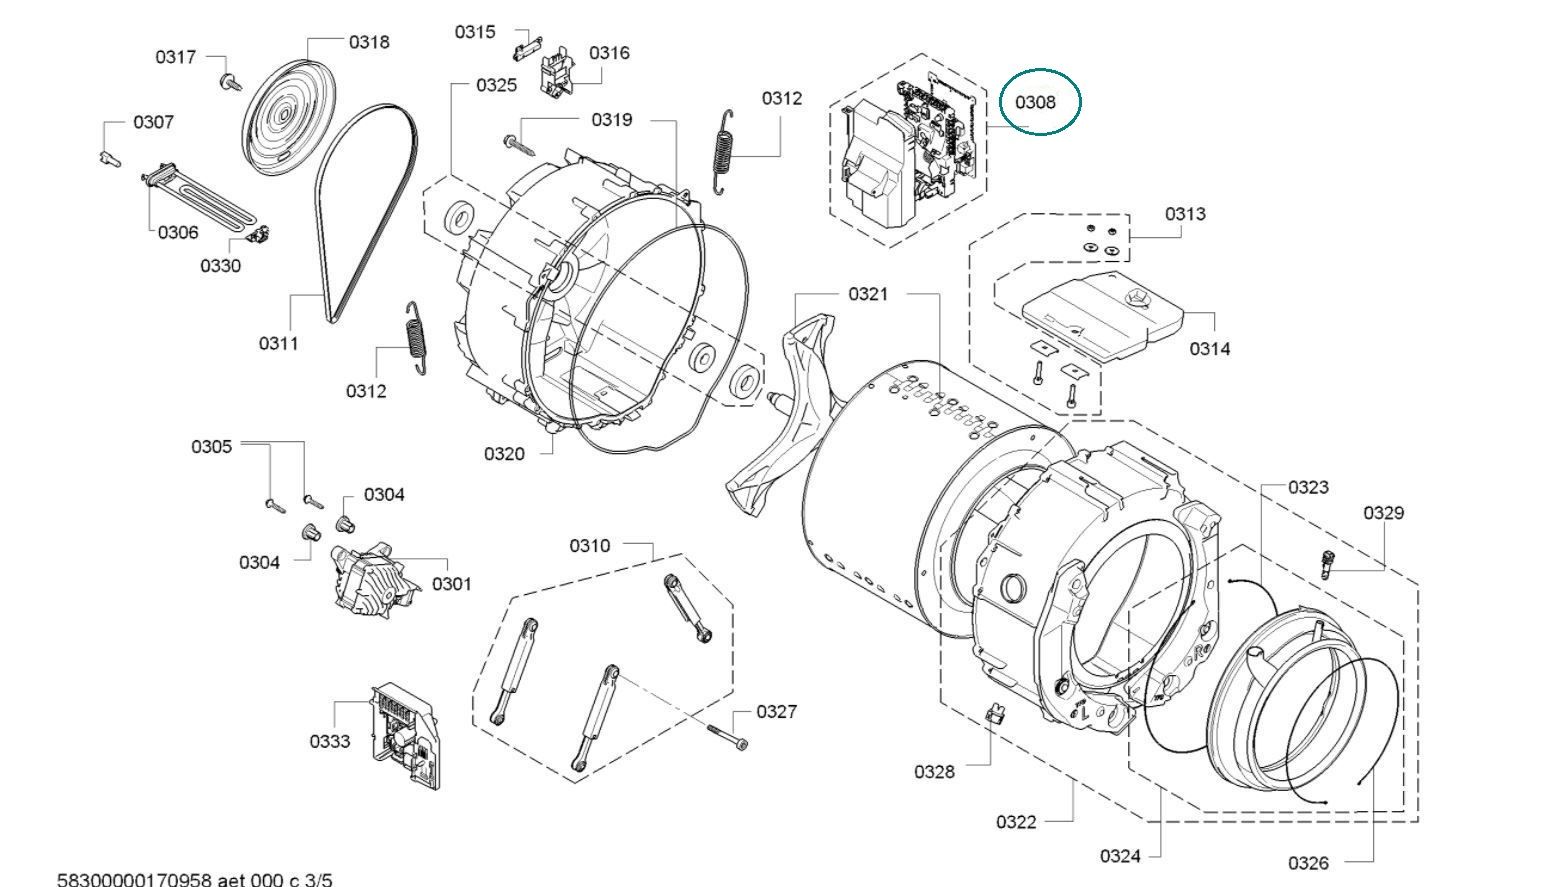 Programmed Power Module for Bosch Siemens Washing Machines - Part. nr. BSH 00746206 BSH - Bosch / Siemens